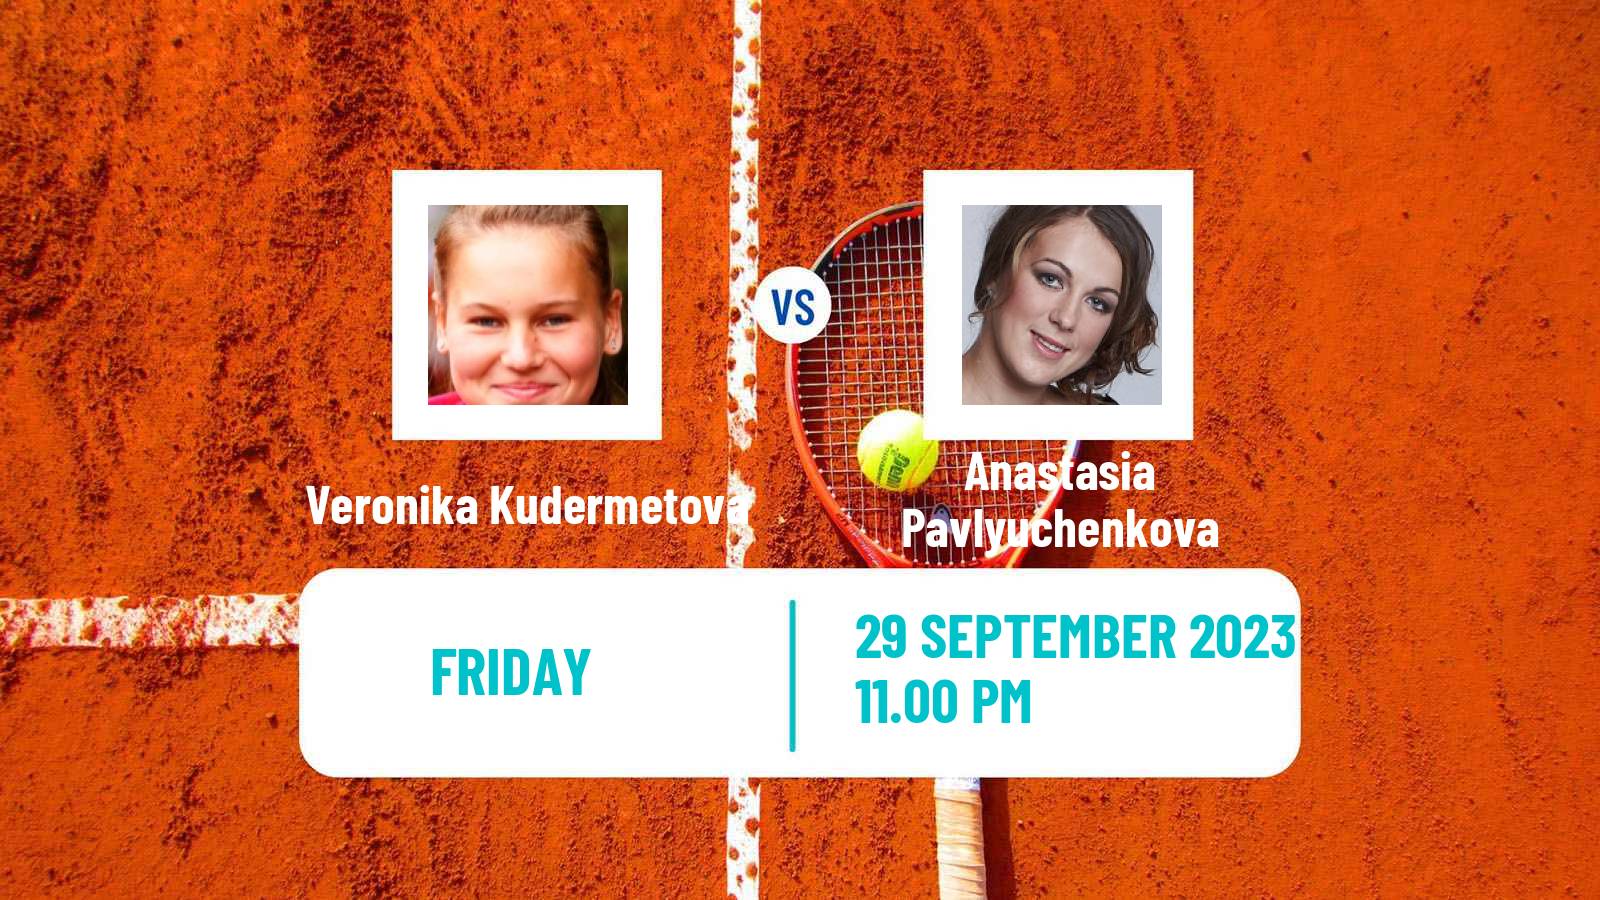 Tennis WTA Tokyo Veronika Kudermetova - Anastasia Pavlyuchenkova